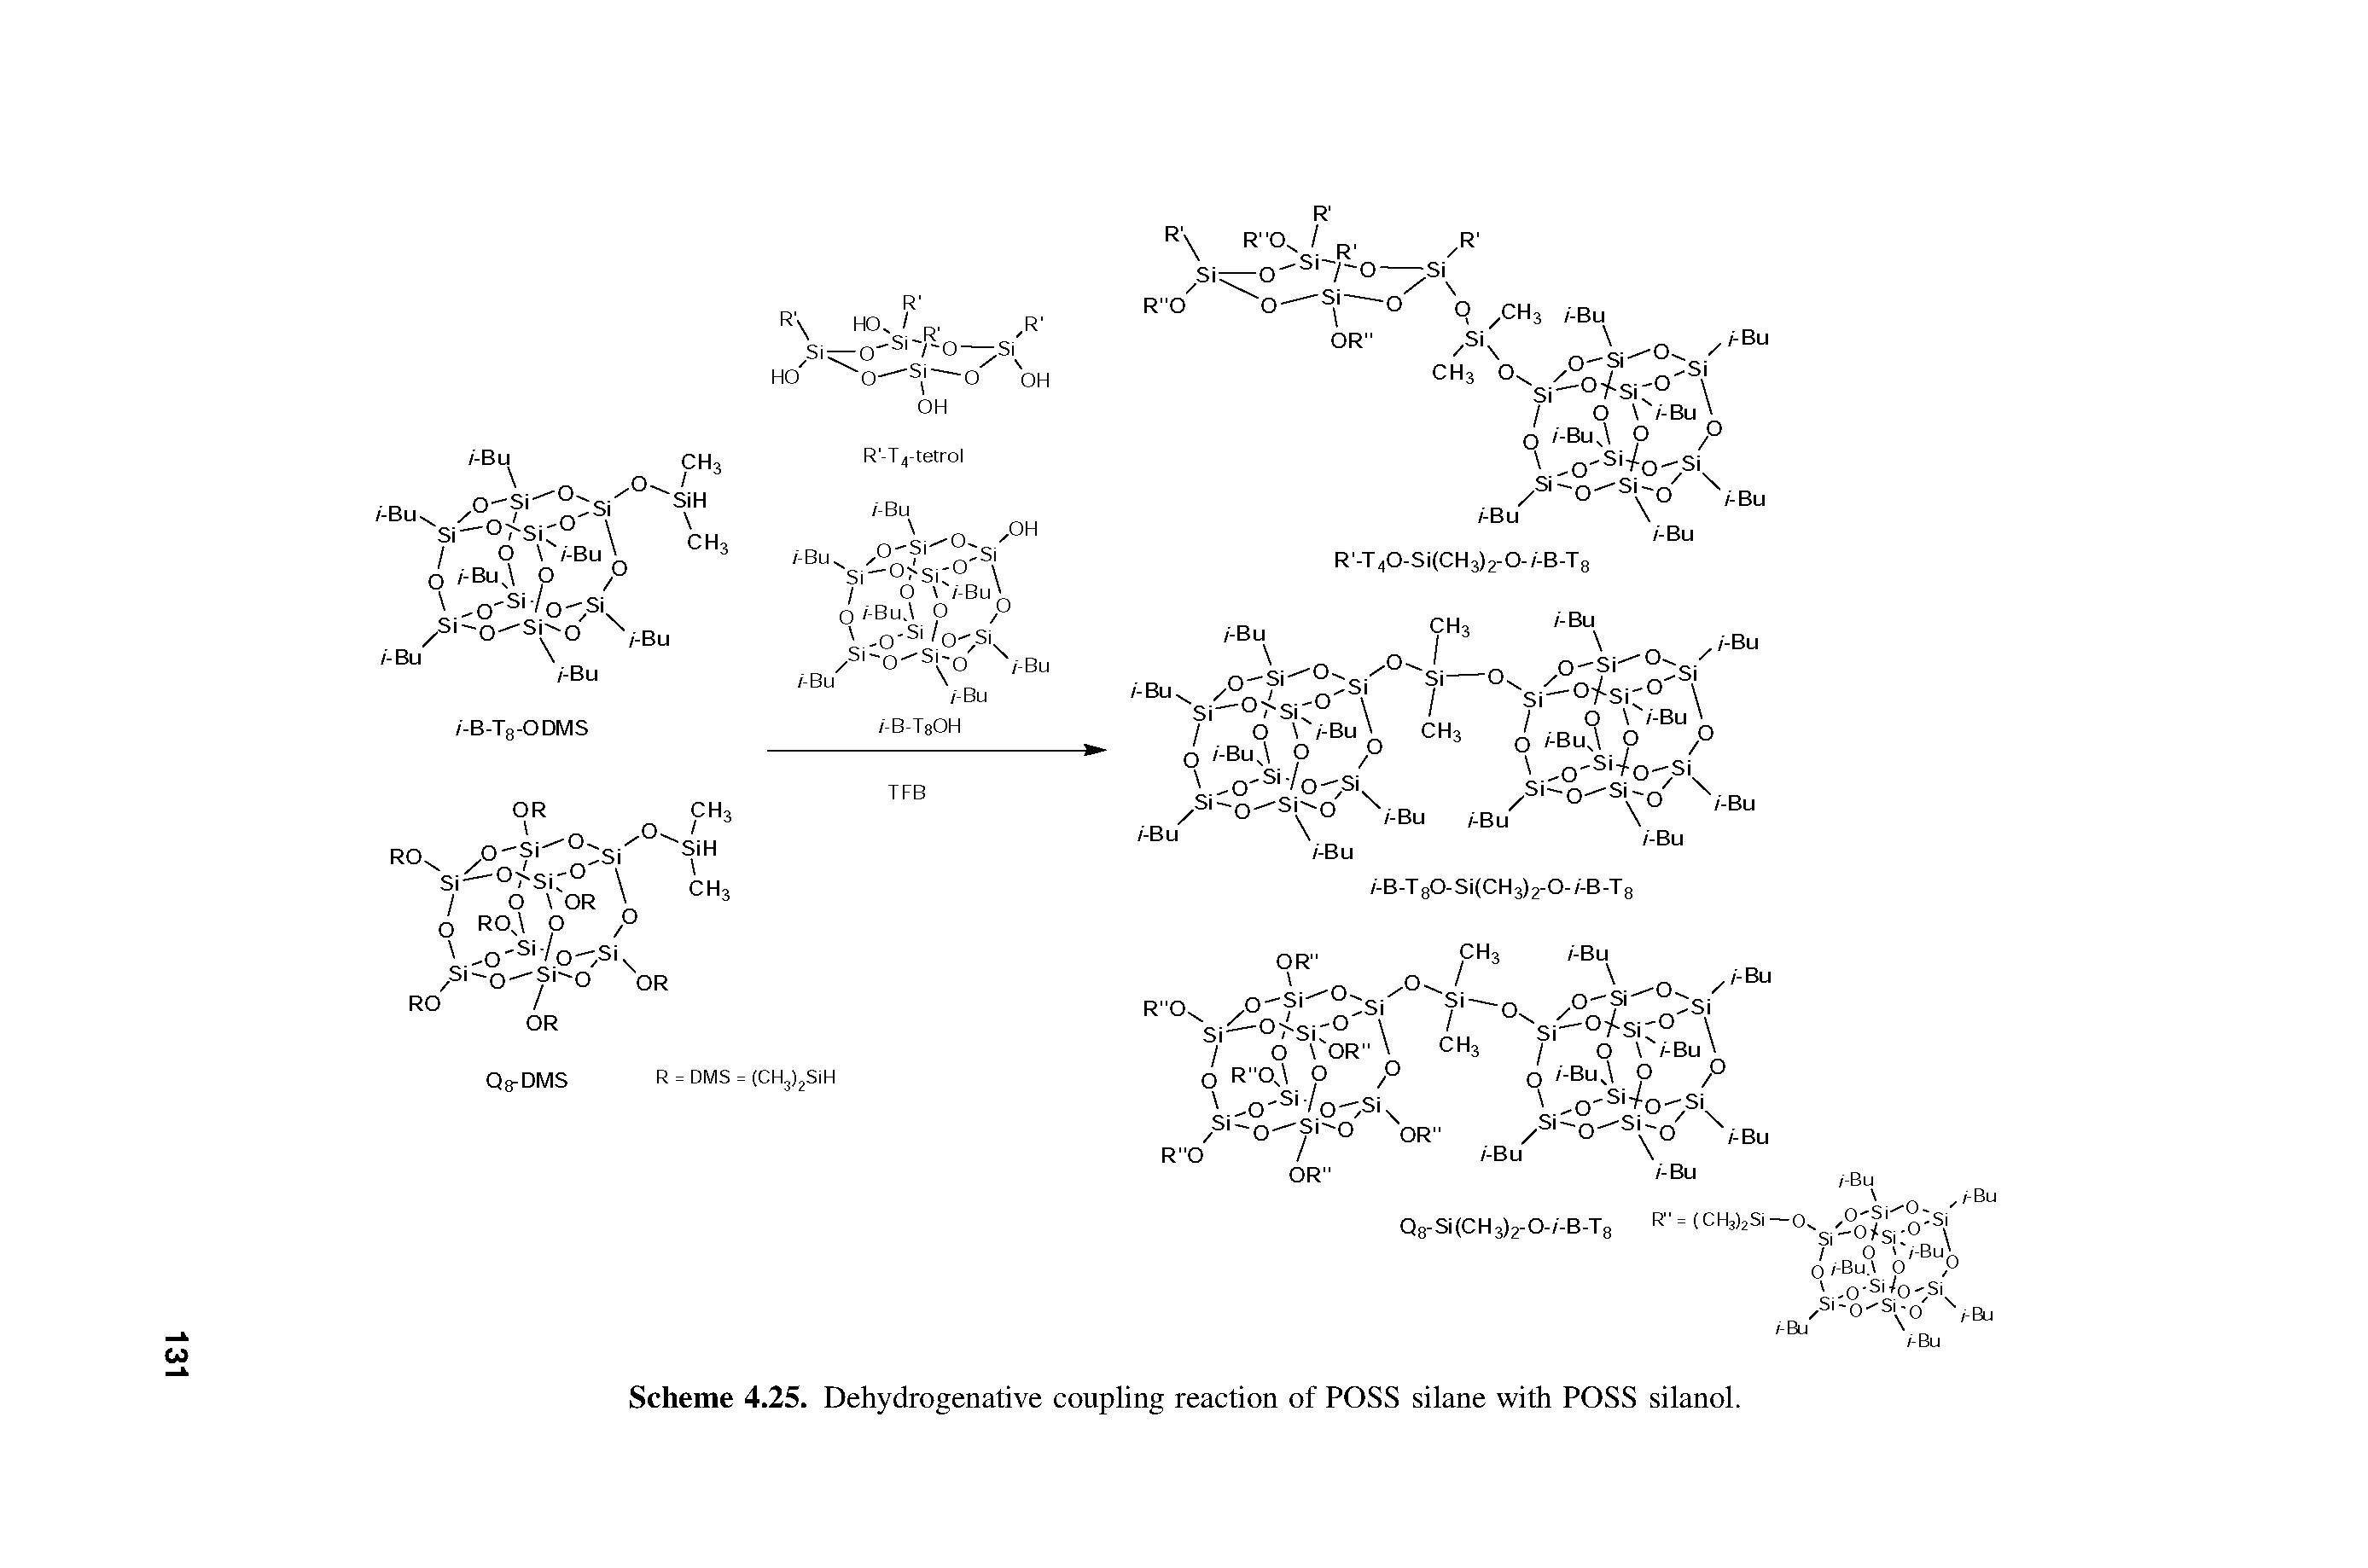 Scheme 4.25. Dehydrogenative coupling reaction of POSS silane with POSS silanol.